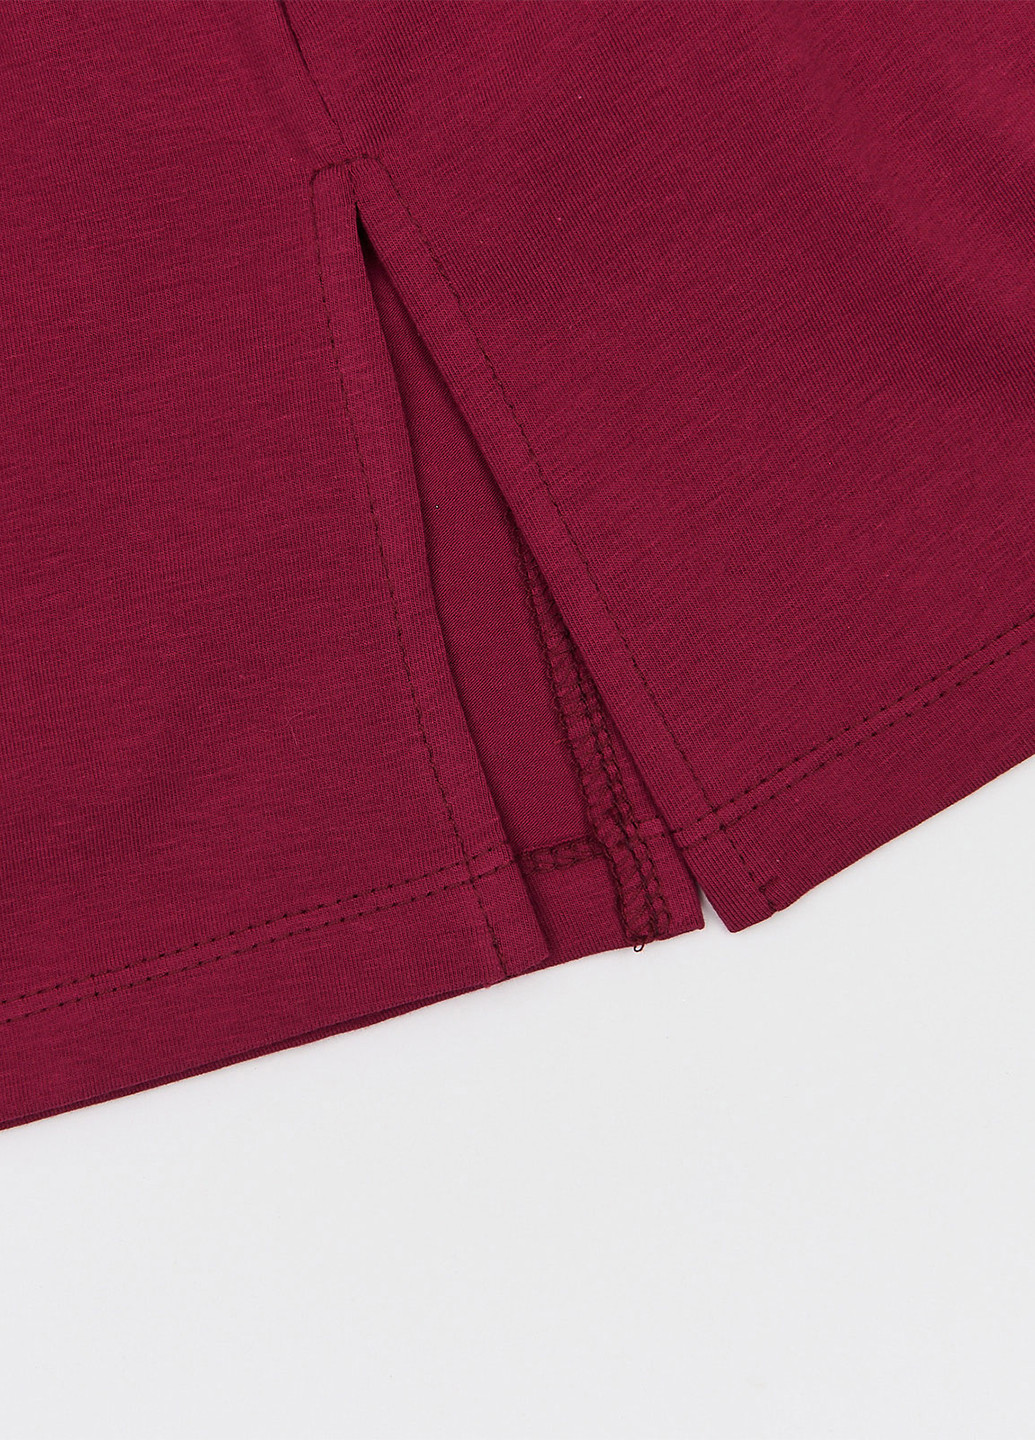 Темно-бордовый летний комплект (сарафан, футболка) Z16